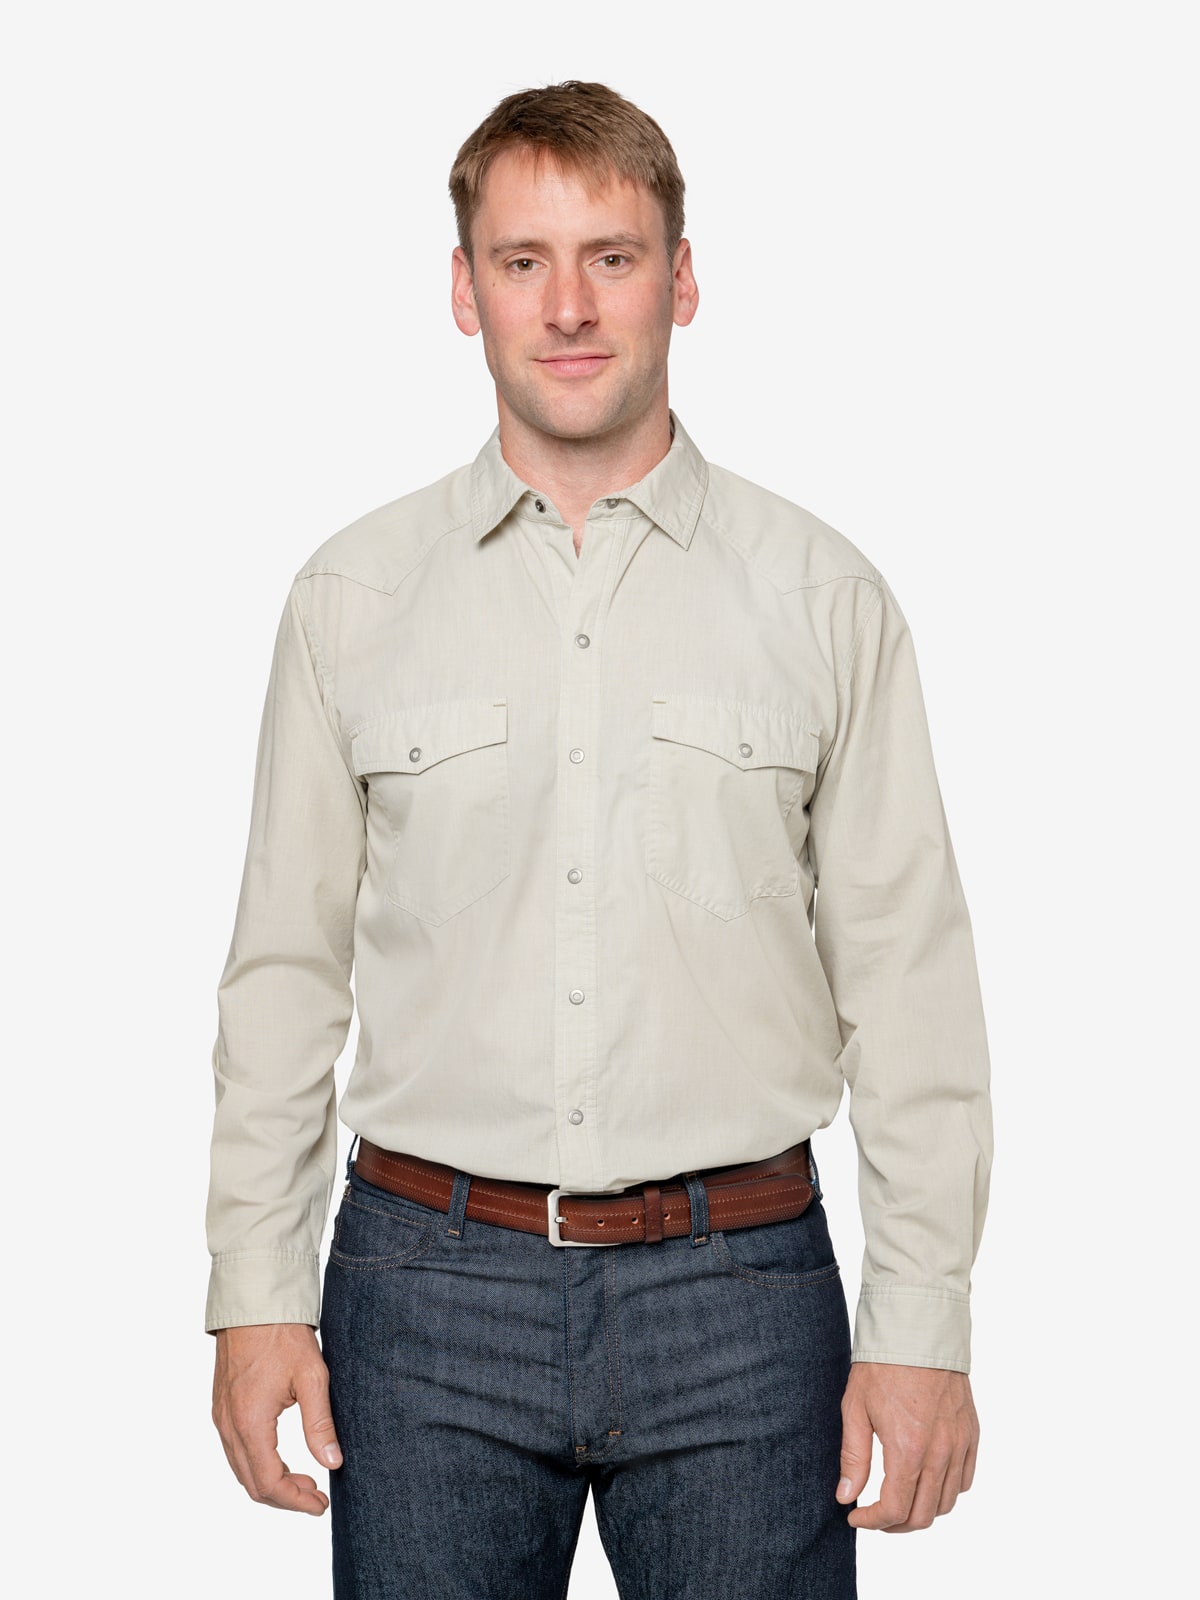 Men's Insect Shield Pro Chambray Shirt